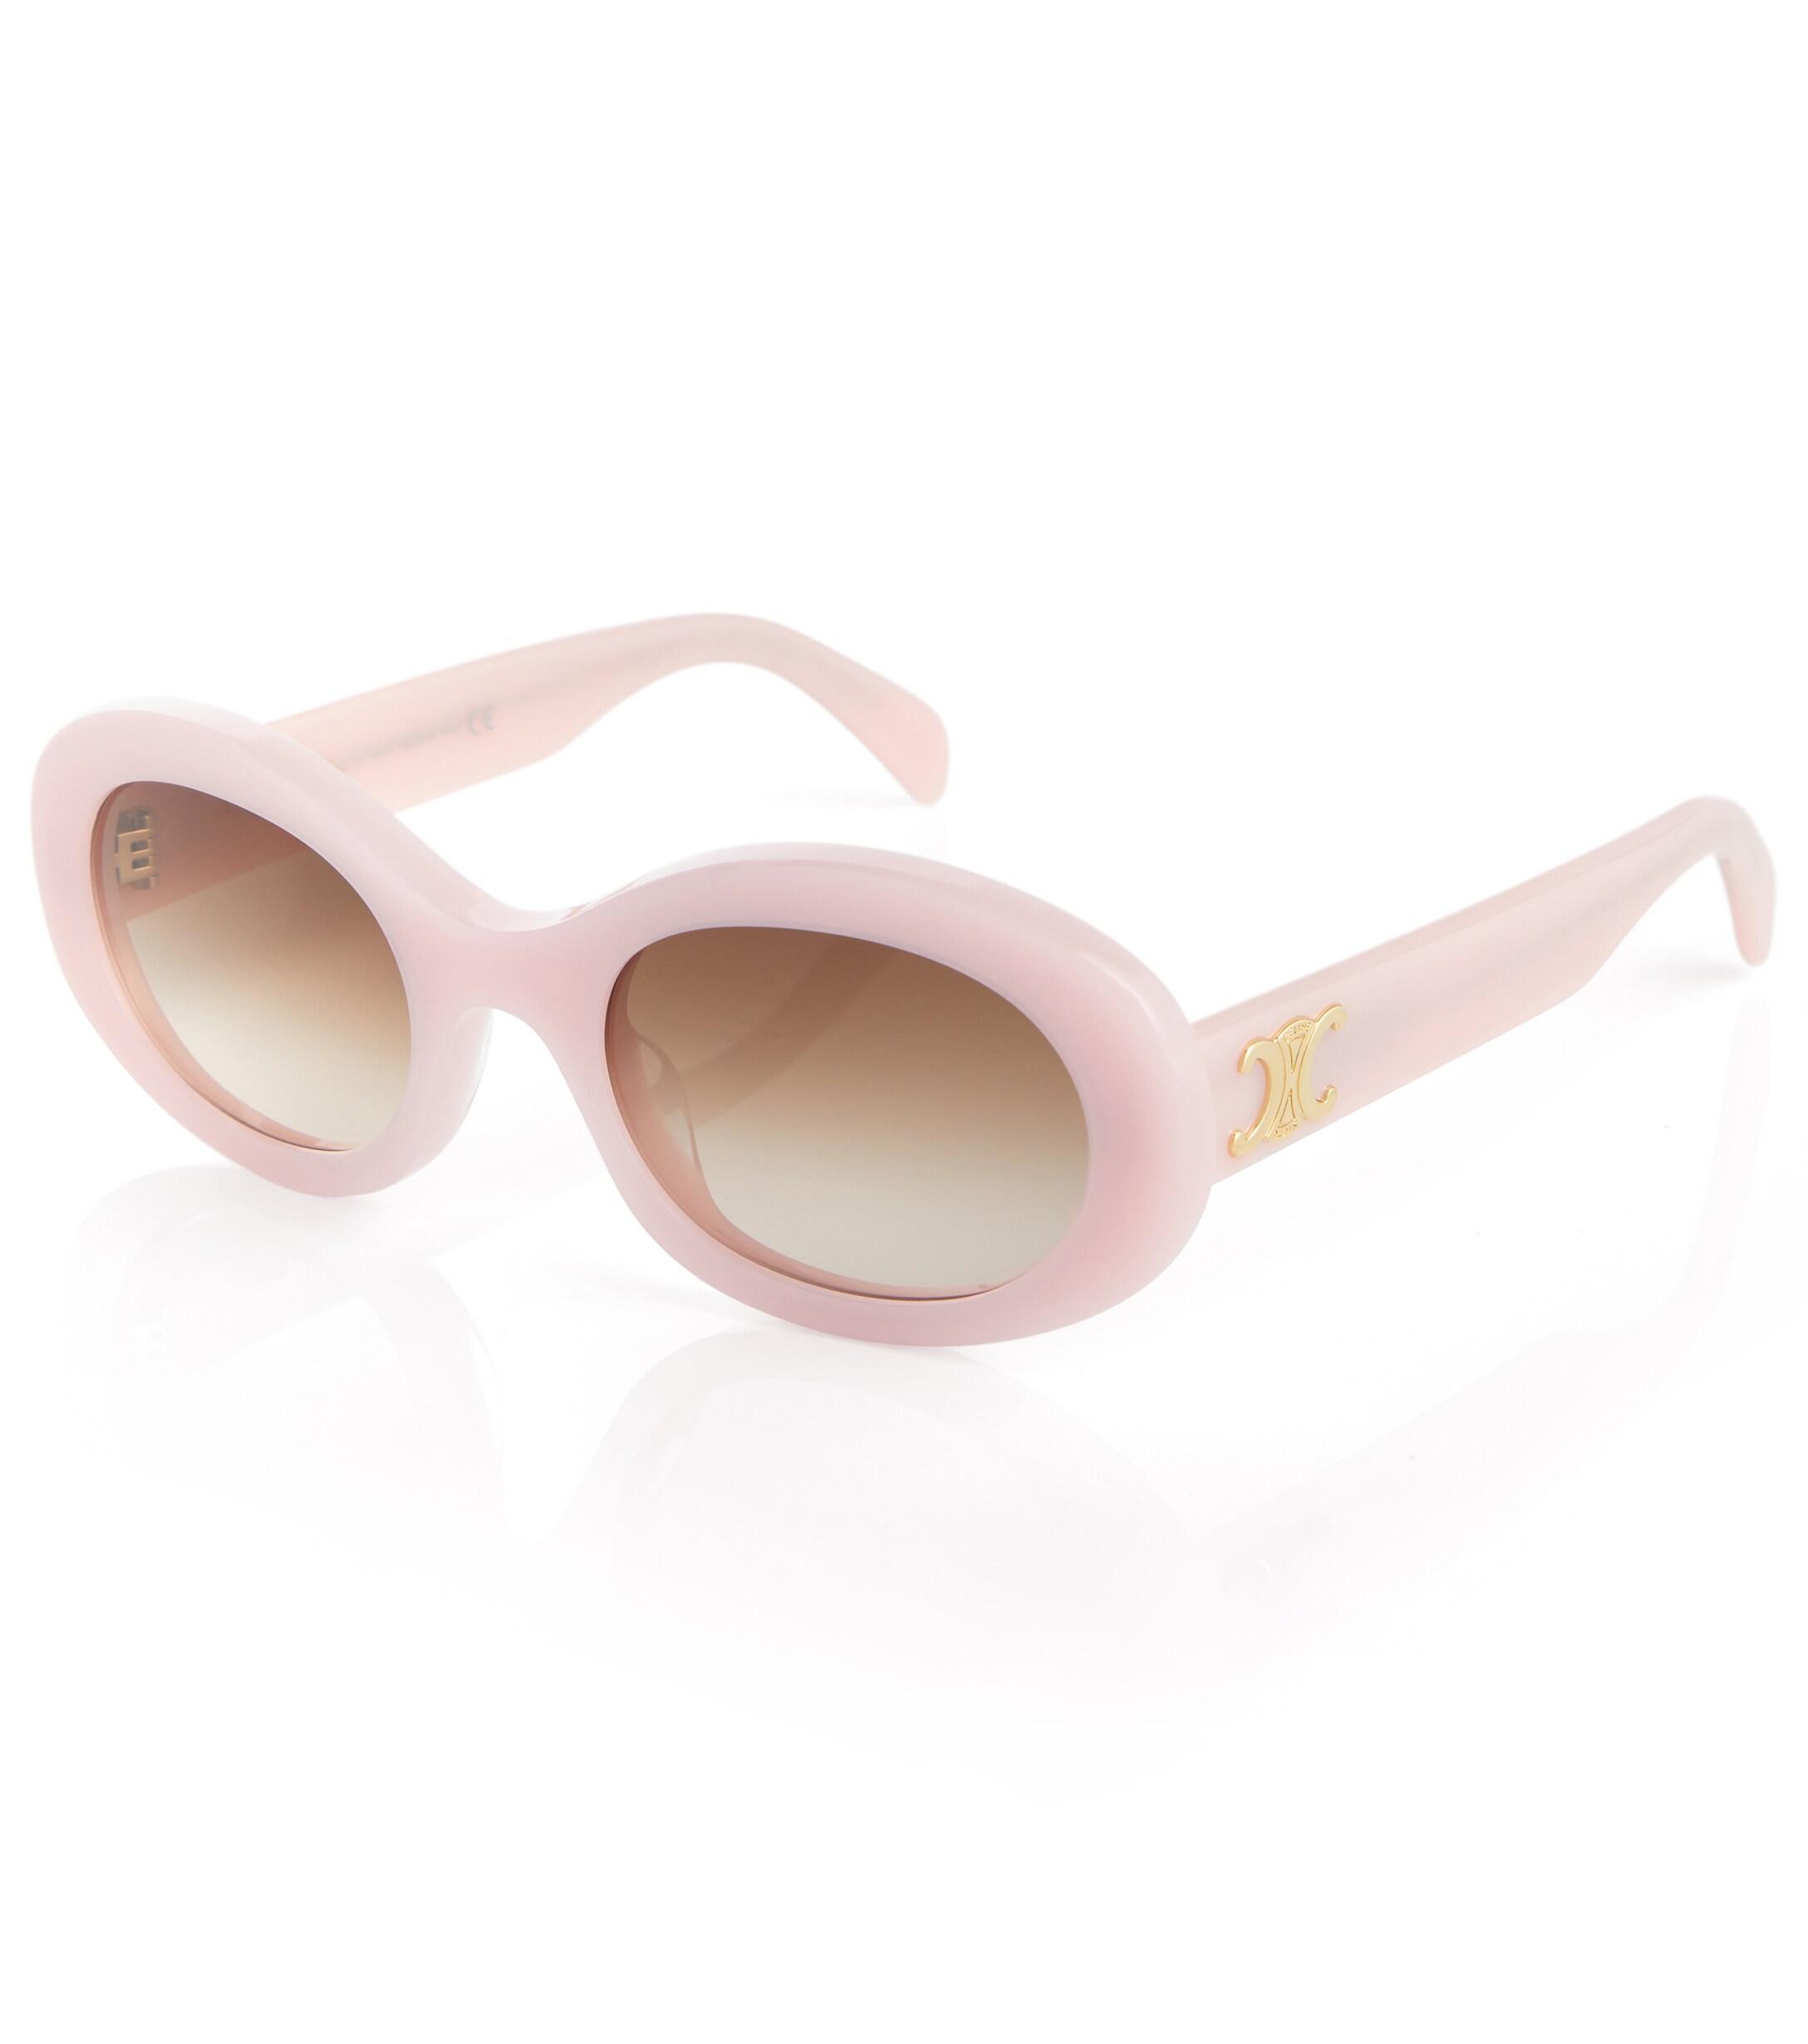 Celine Acetate Sunglasses in Pink |